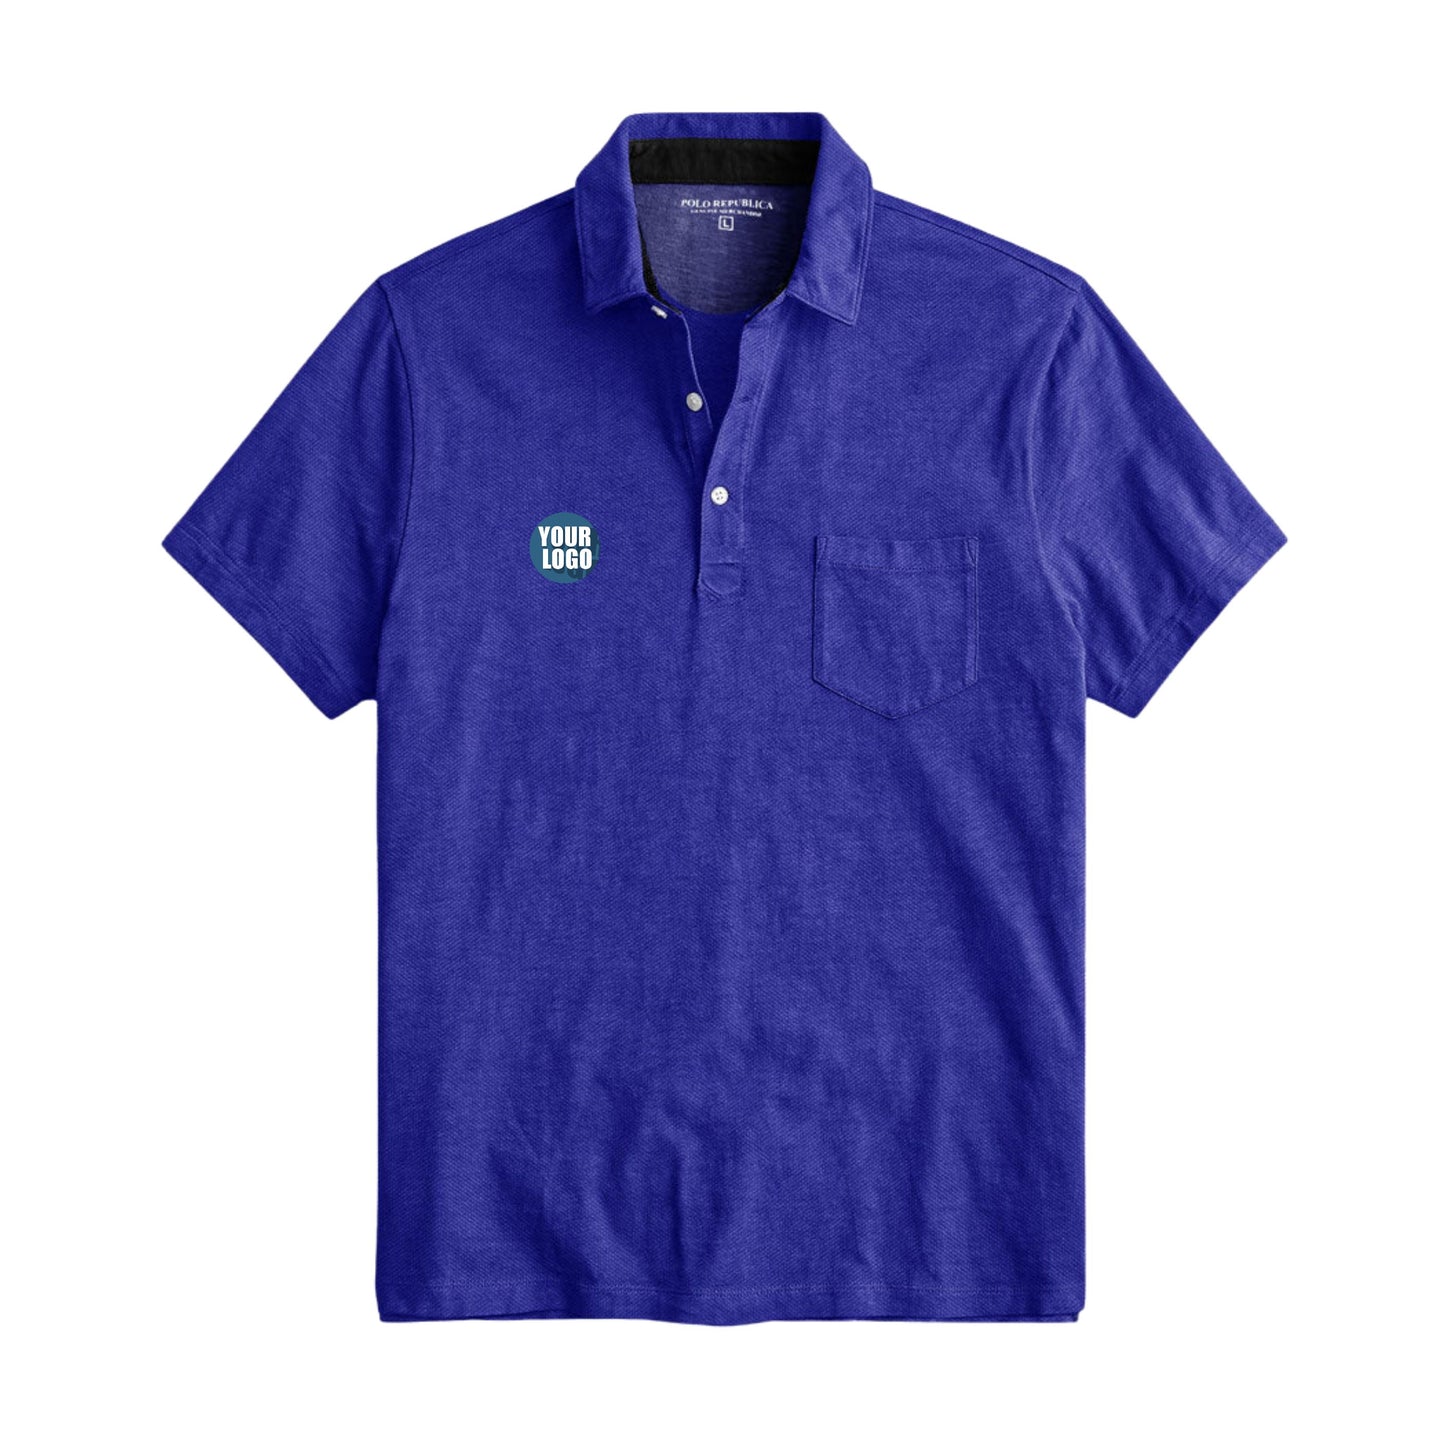 Sample Men's Custom Print/Embroidered Pocket Polo Shirt